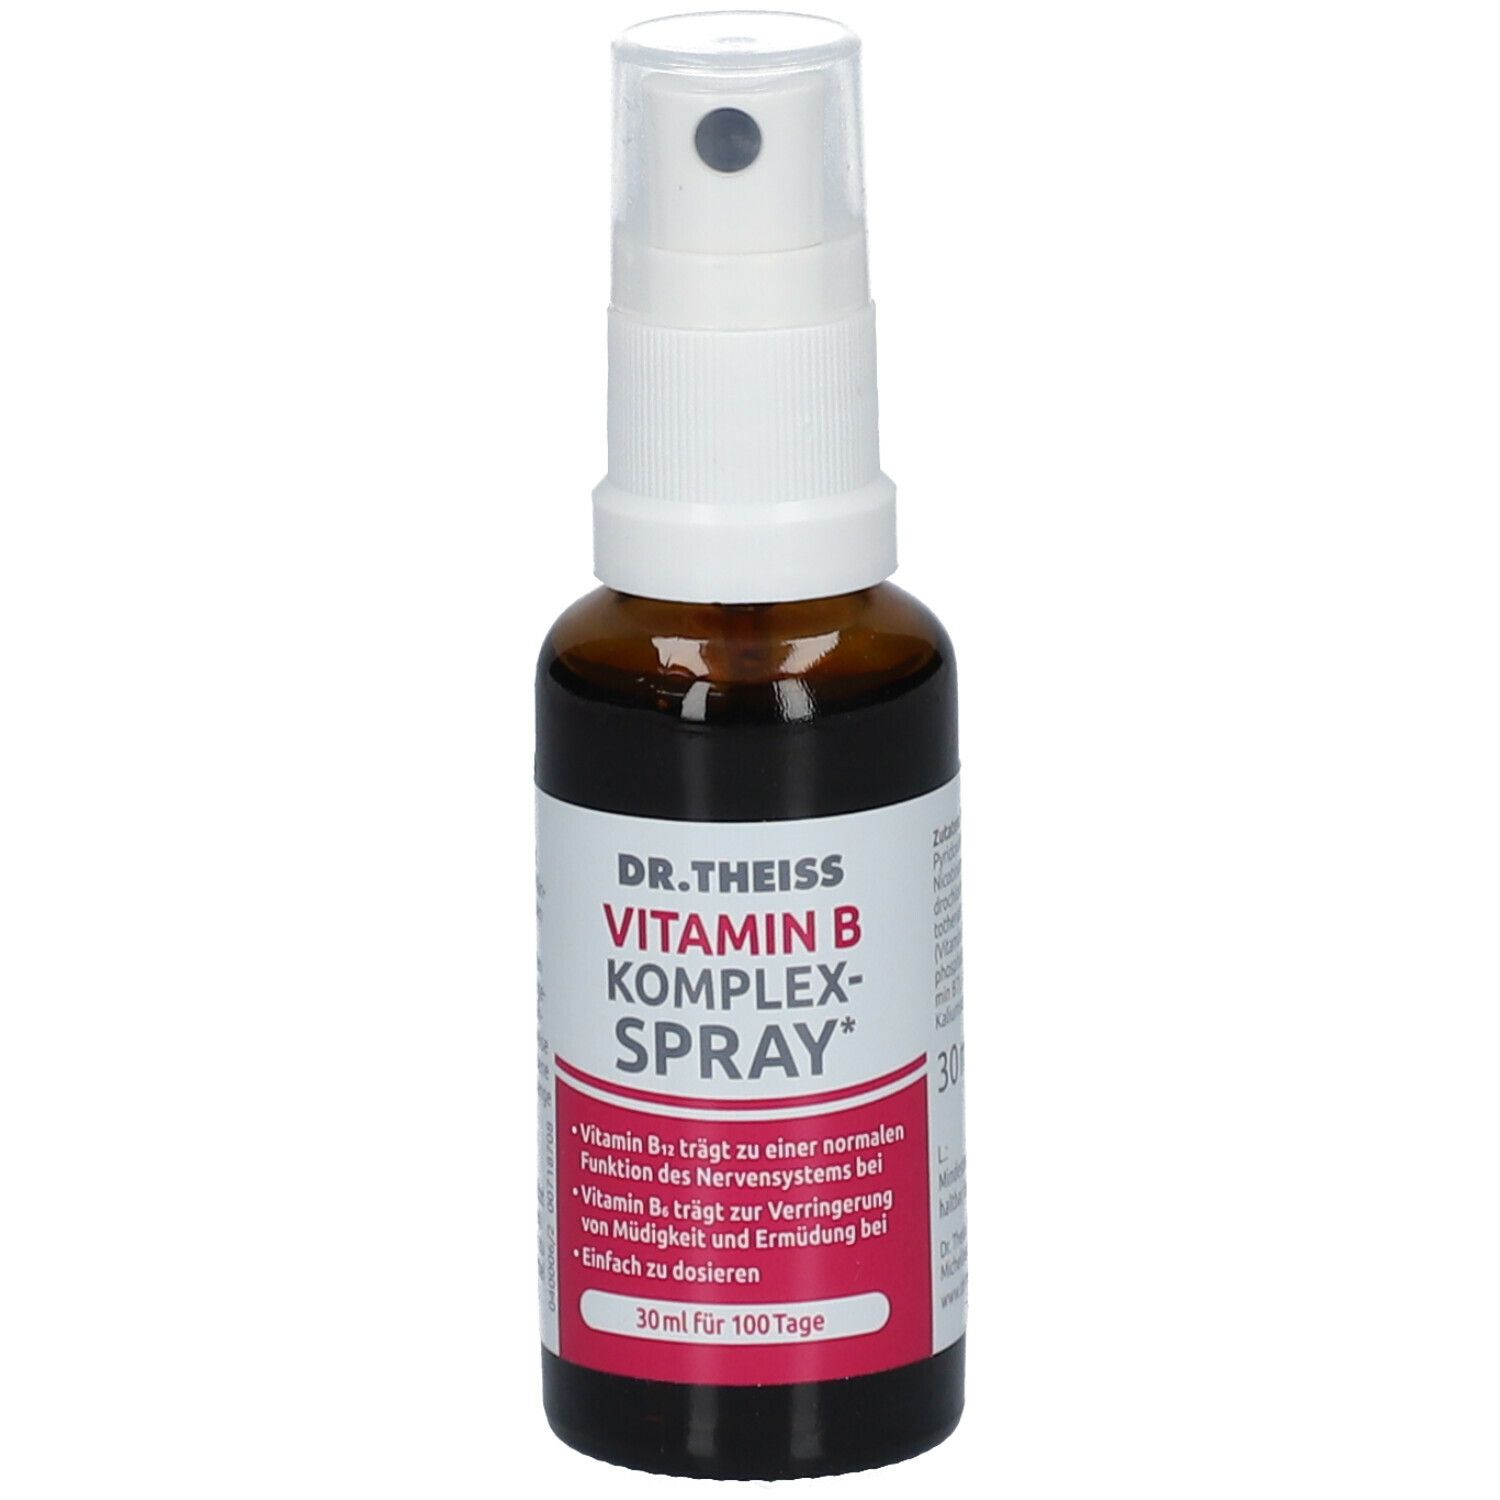 Image of DR. THEISS Vitamin B Komplex-Spray